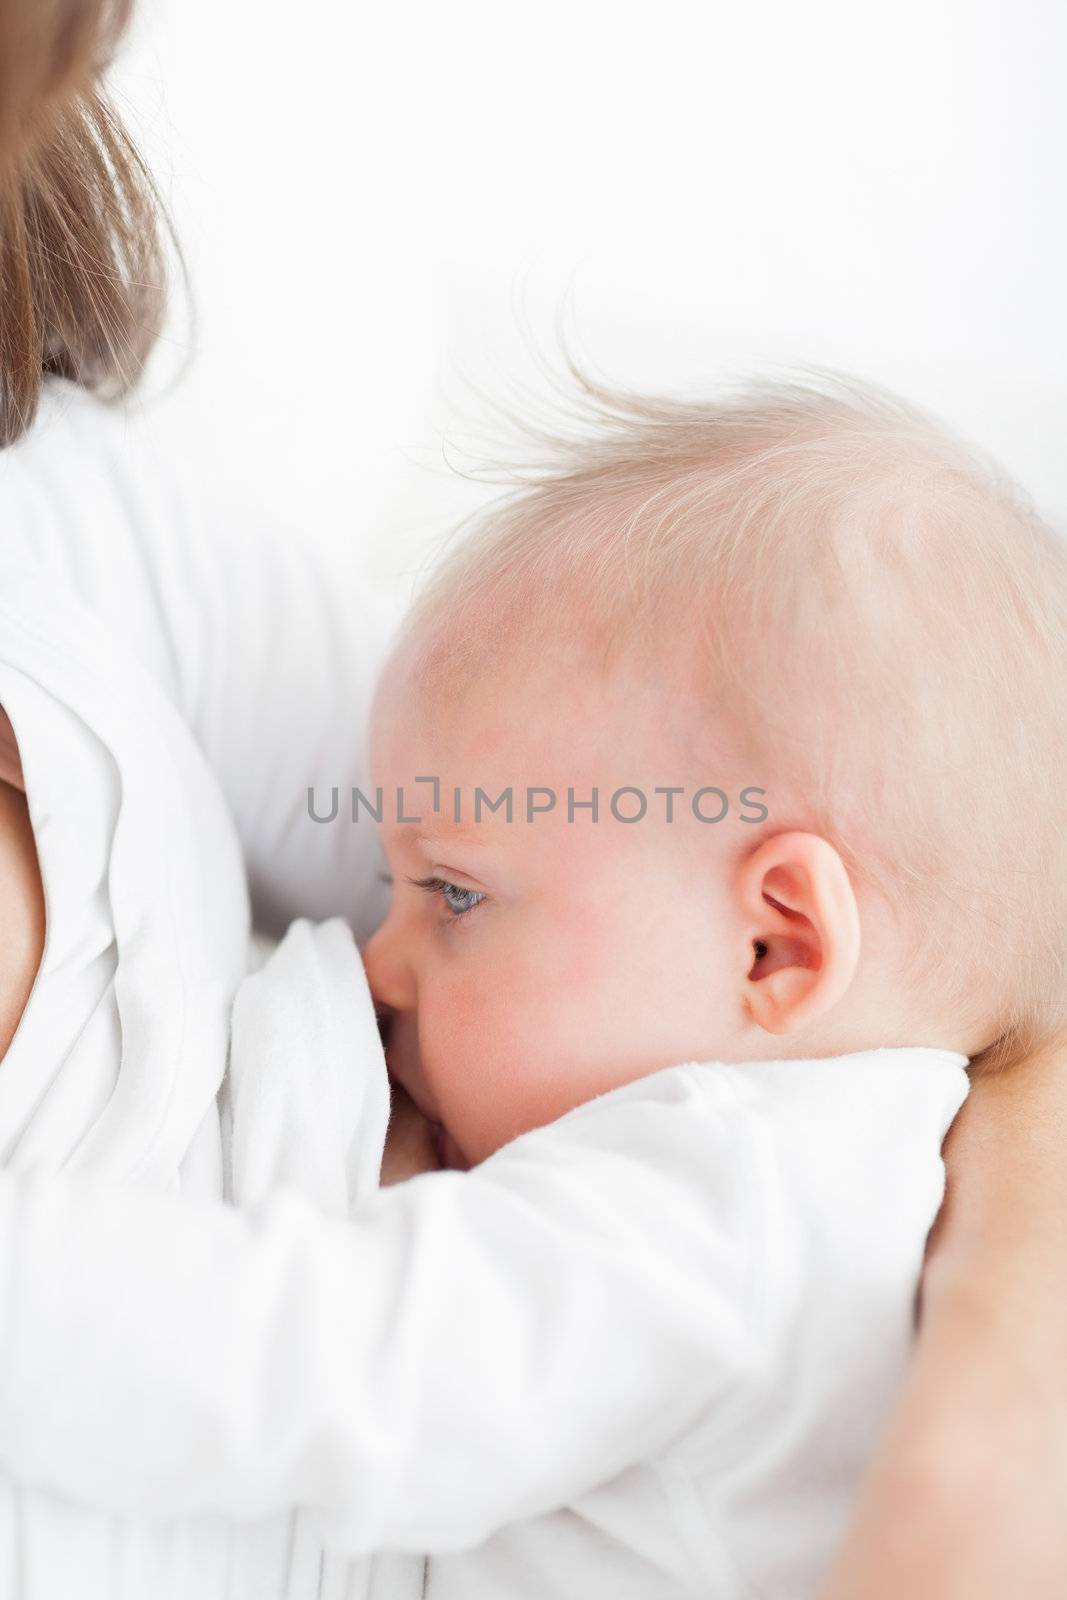 Mother breastfeeding her baby by Wavebreakmedia